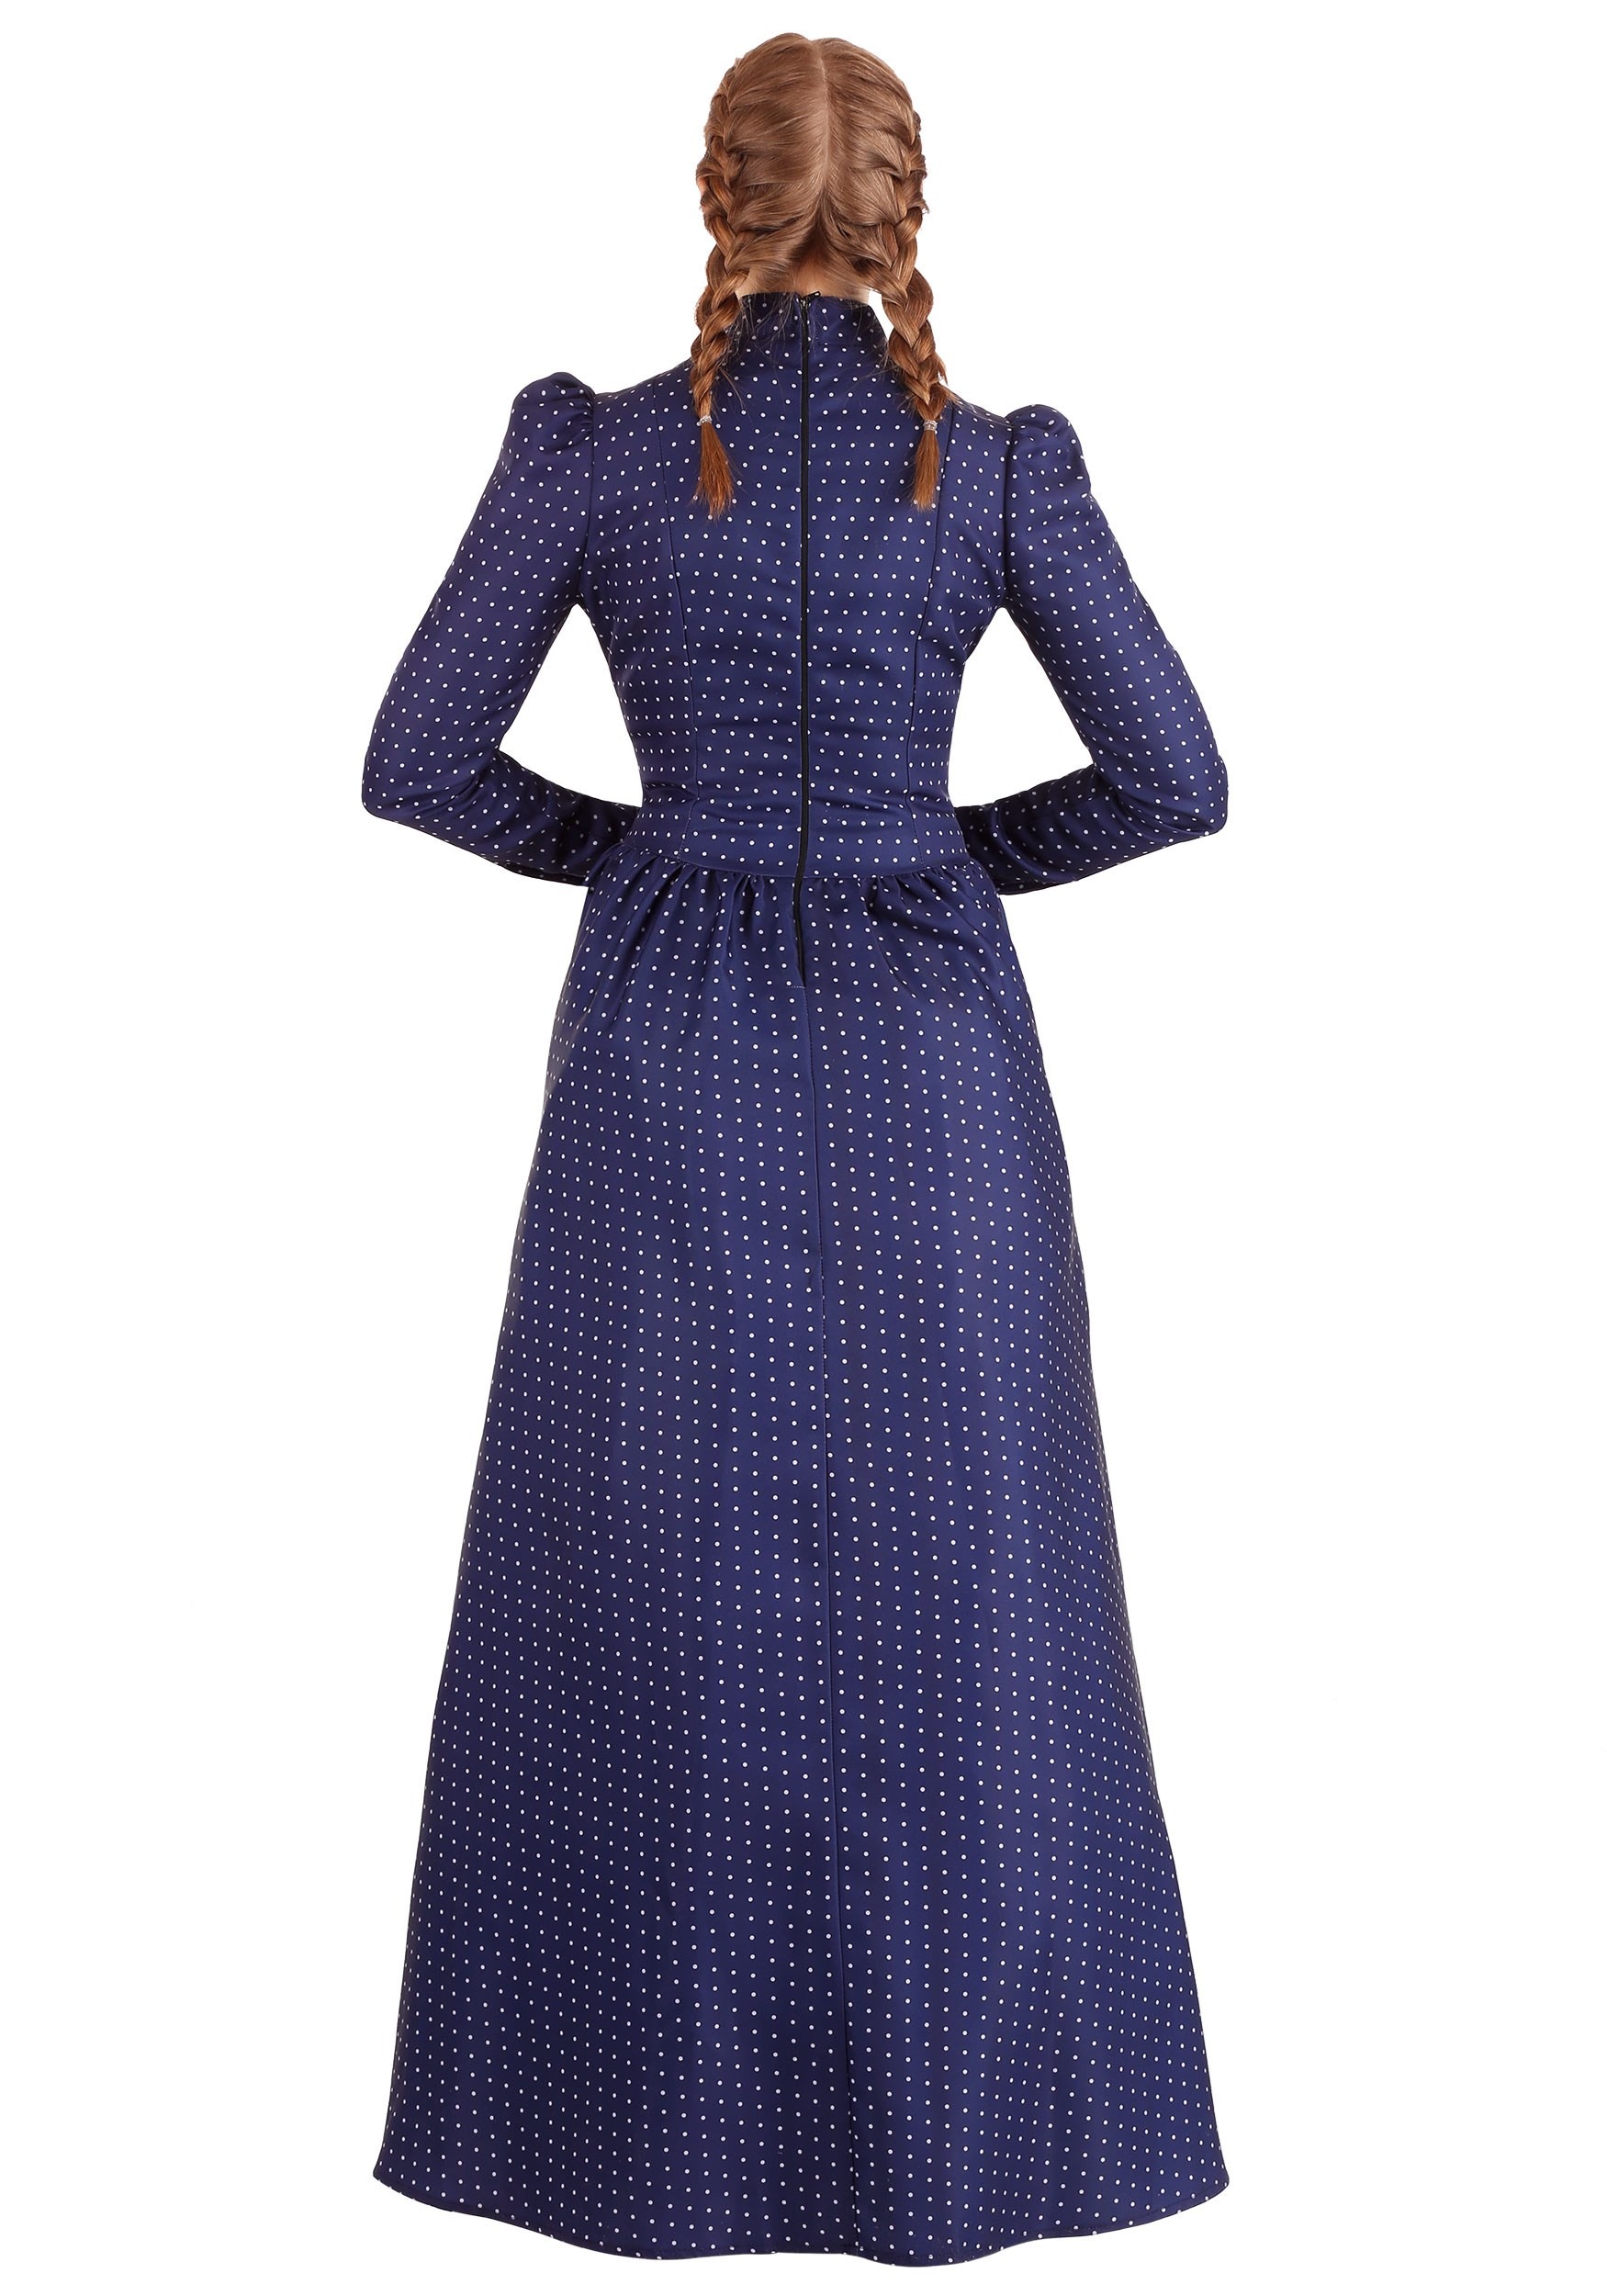 Laura Ingalls Wilder Women's Fancy Dress Costume